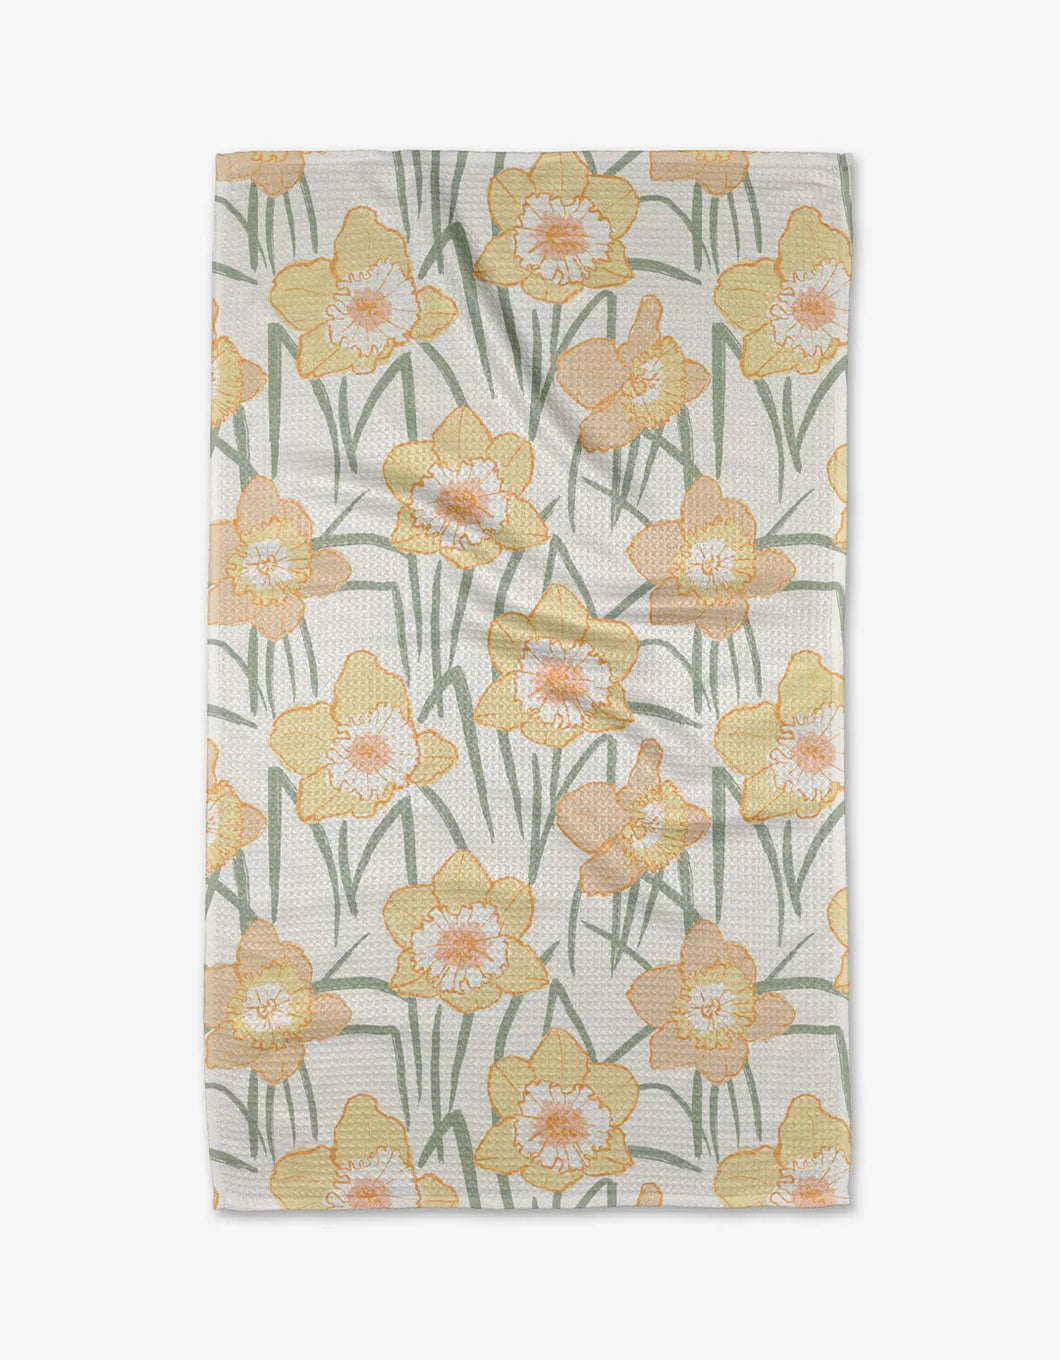 Geometry Kitchen Tea Towel: Spring Daffodil Fields